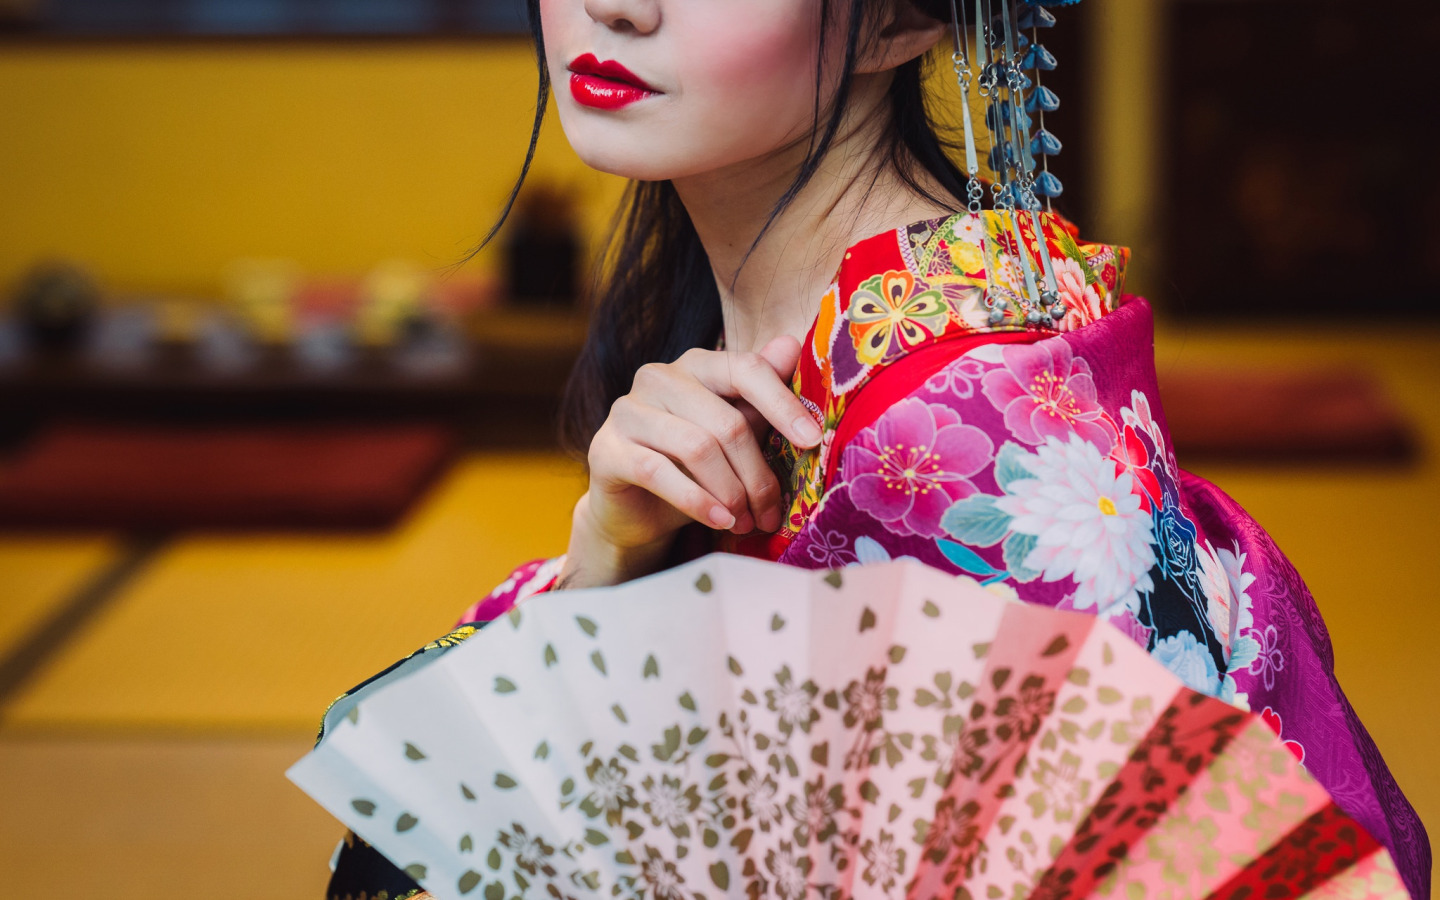 Красивые девушки японки мода